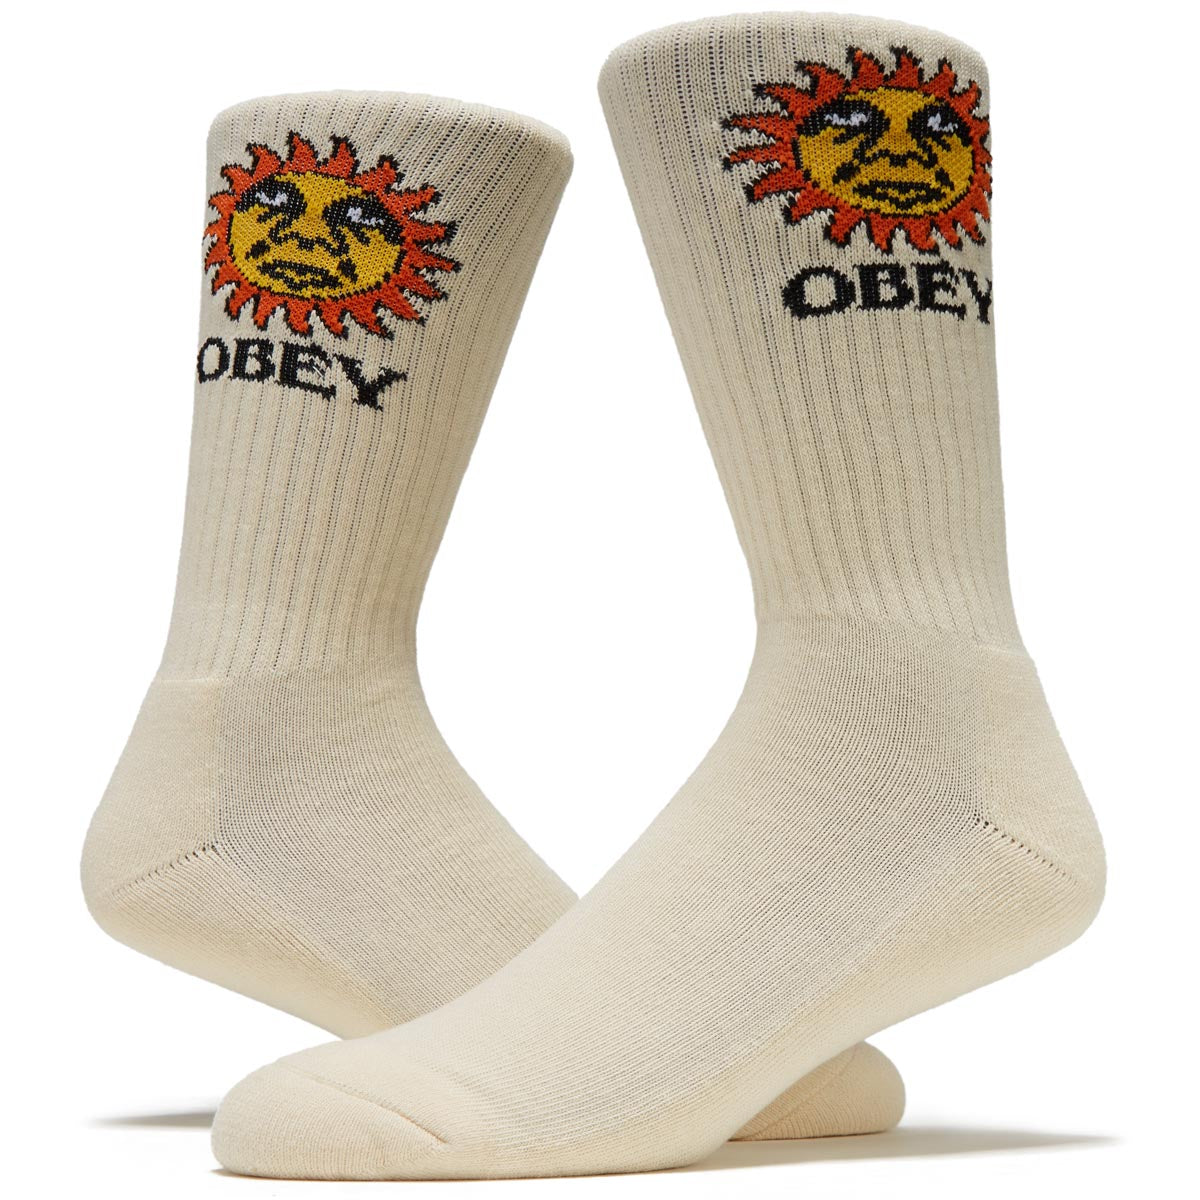 Obey Sunshine Socks - Unbleached image 2